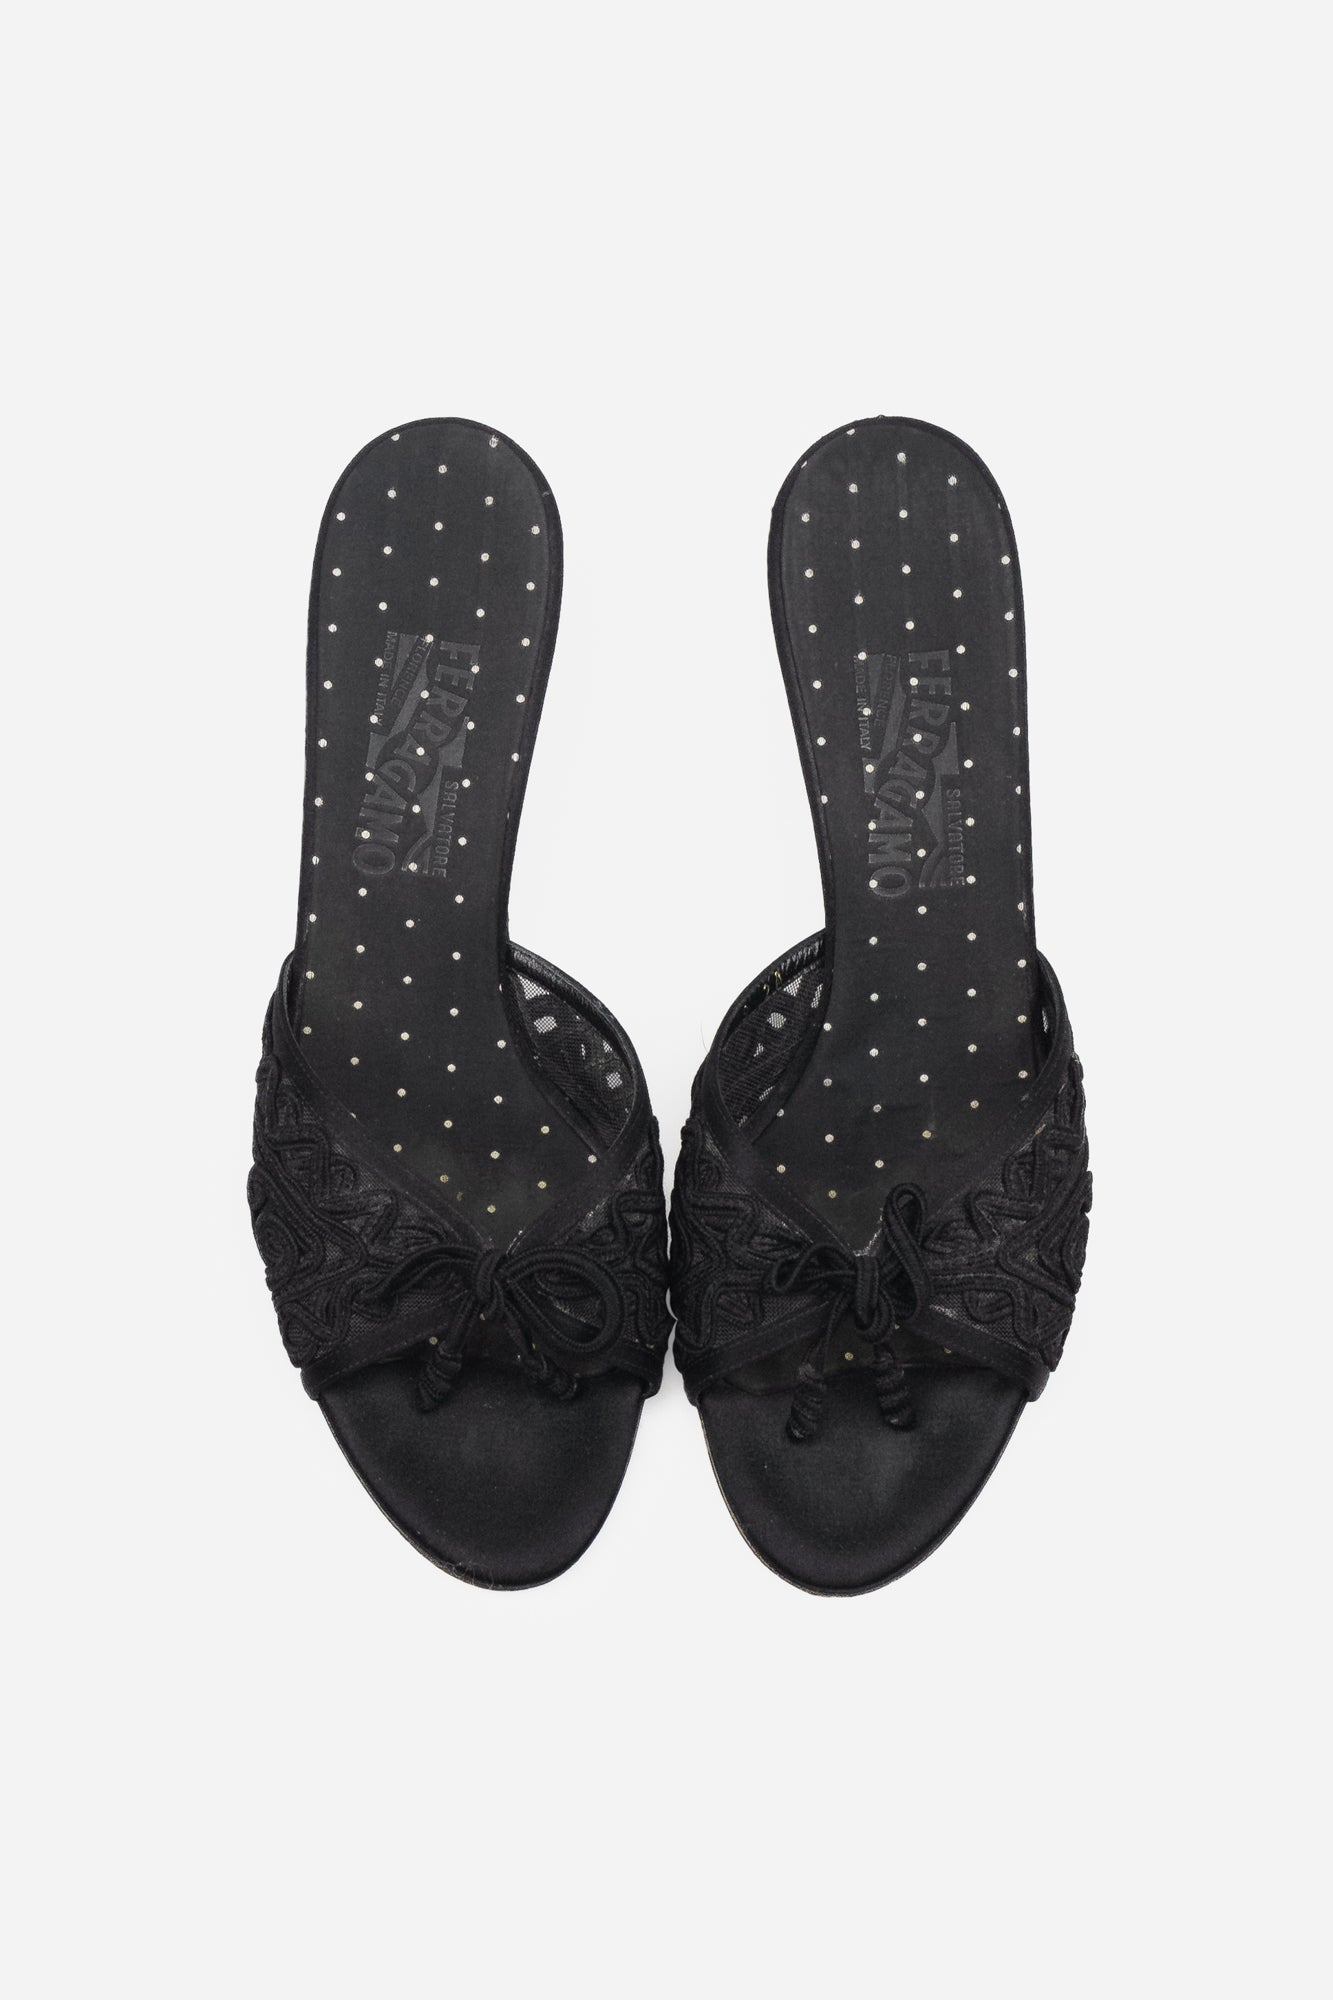 Black Embroided Kitten Heel Sandals